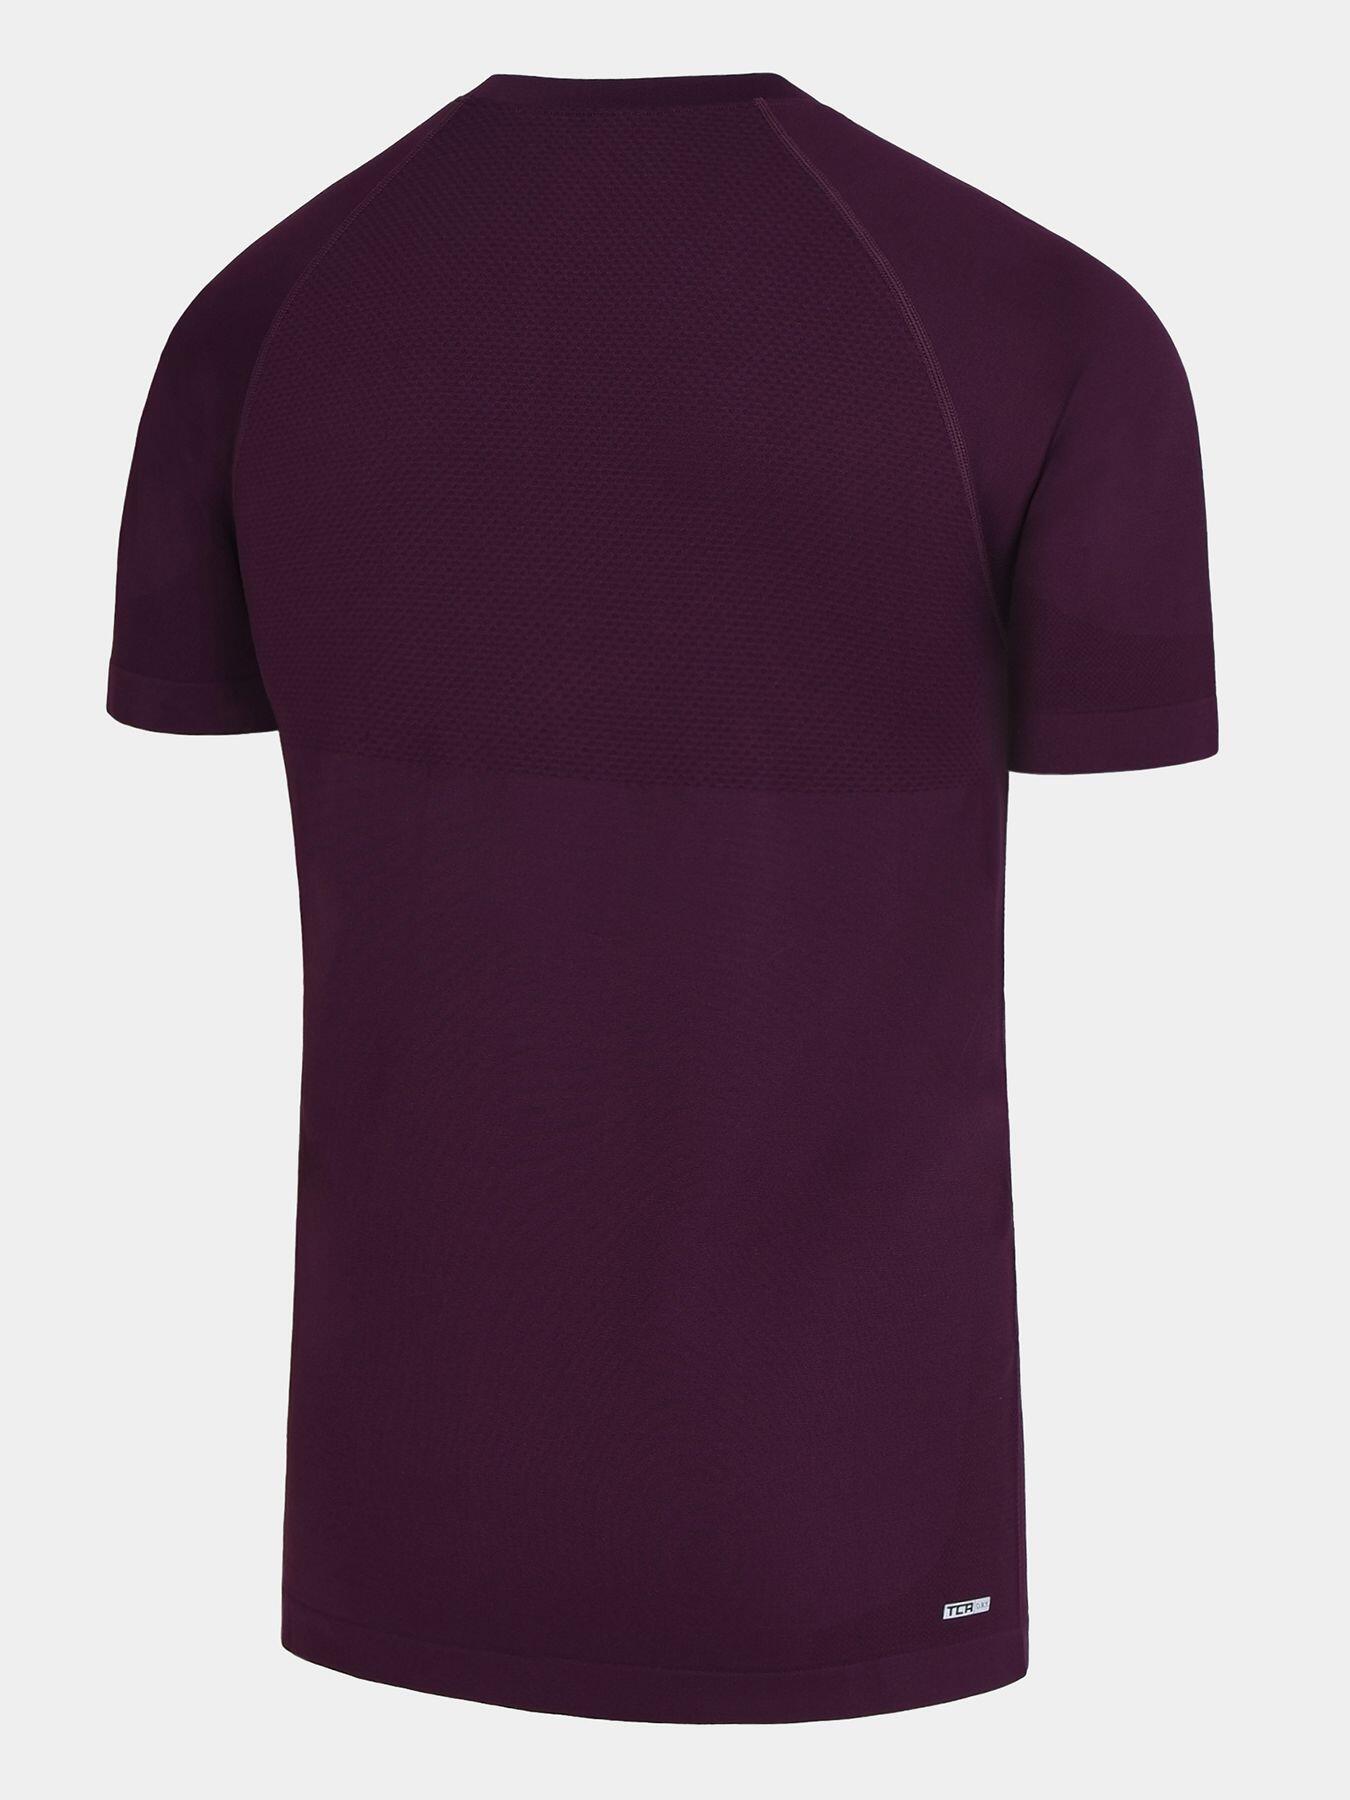 Men's Superknit Breathable Running Gym T-Shirt - Purple 2/5